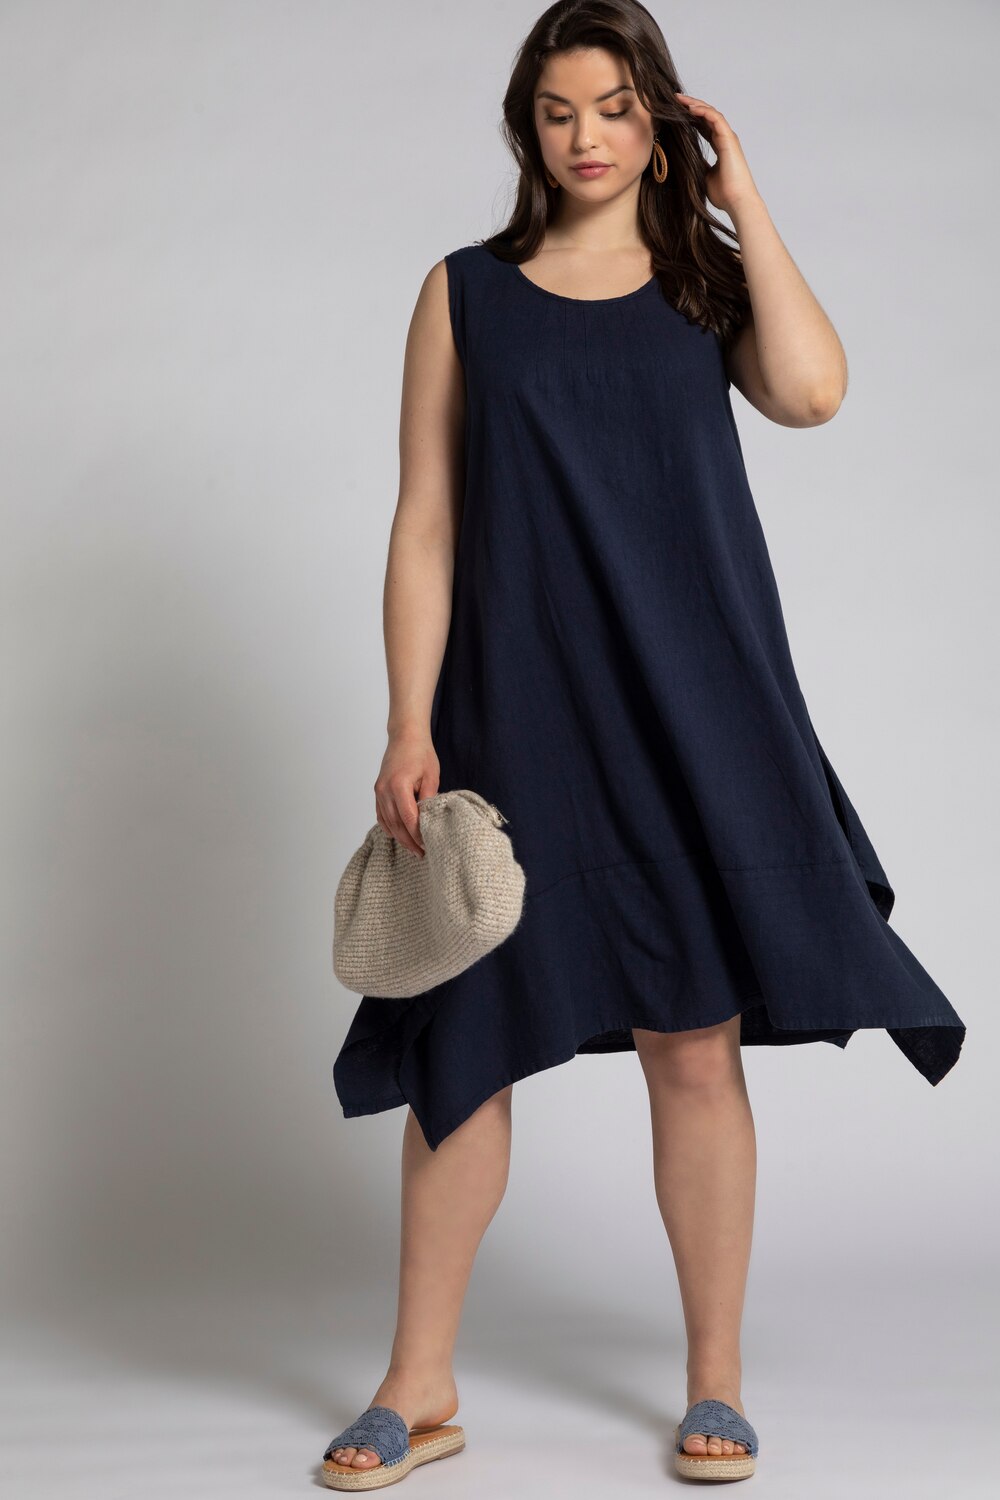 Plus Size Crochet Inset Pointed Hem Linen Blend Tank Dress, Woman, blue, size: 28/30, linen/viscose, Ulla Popken